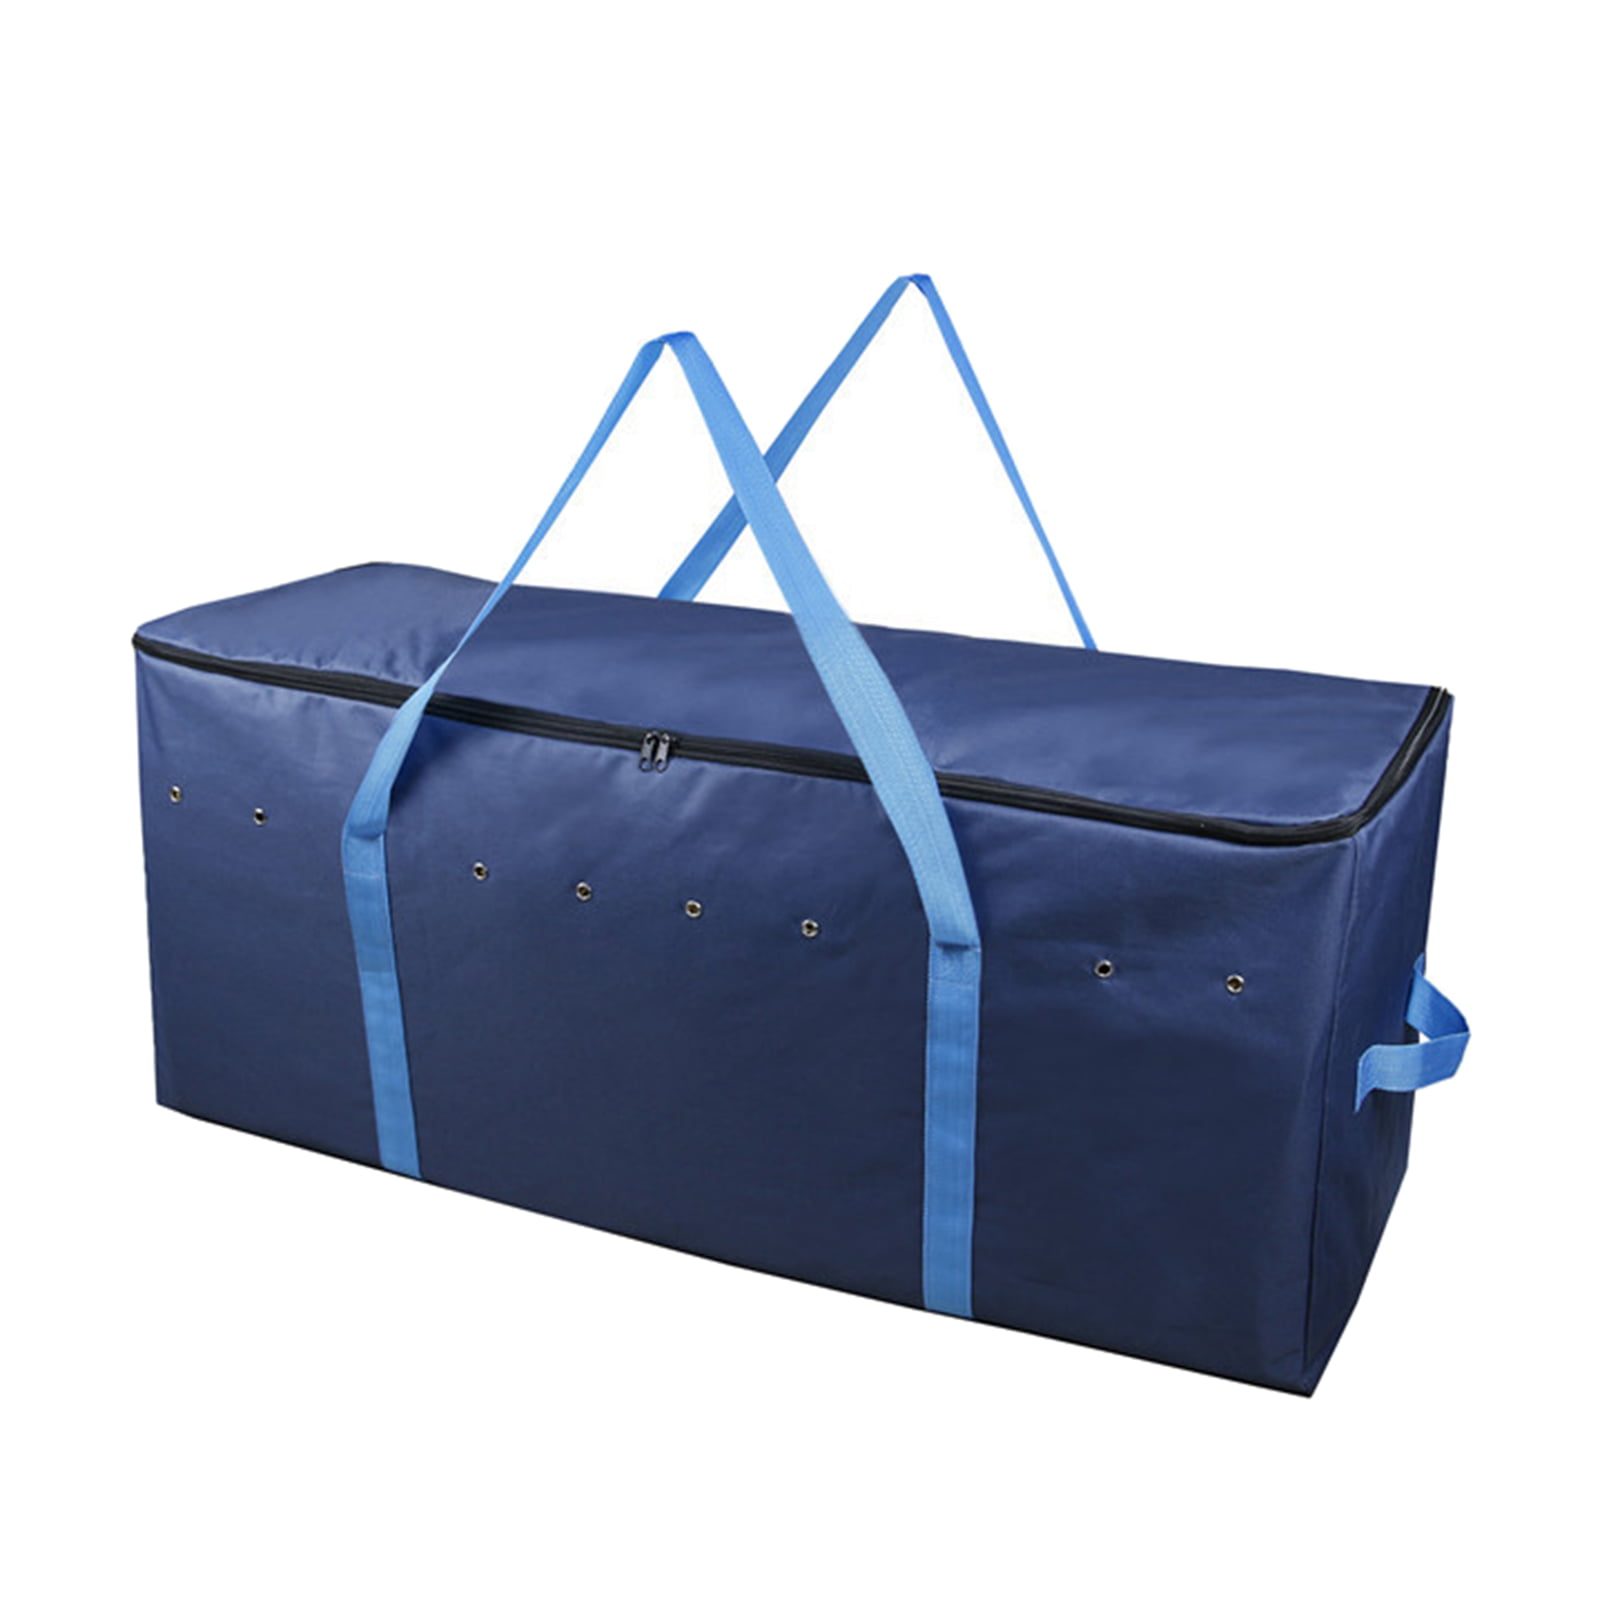 Zipper Large Storage Hay Bale Carry Bag,Blue TOKSKS Hay Bale Bag